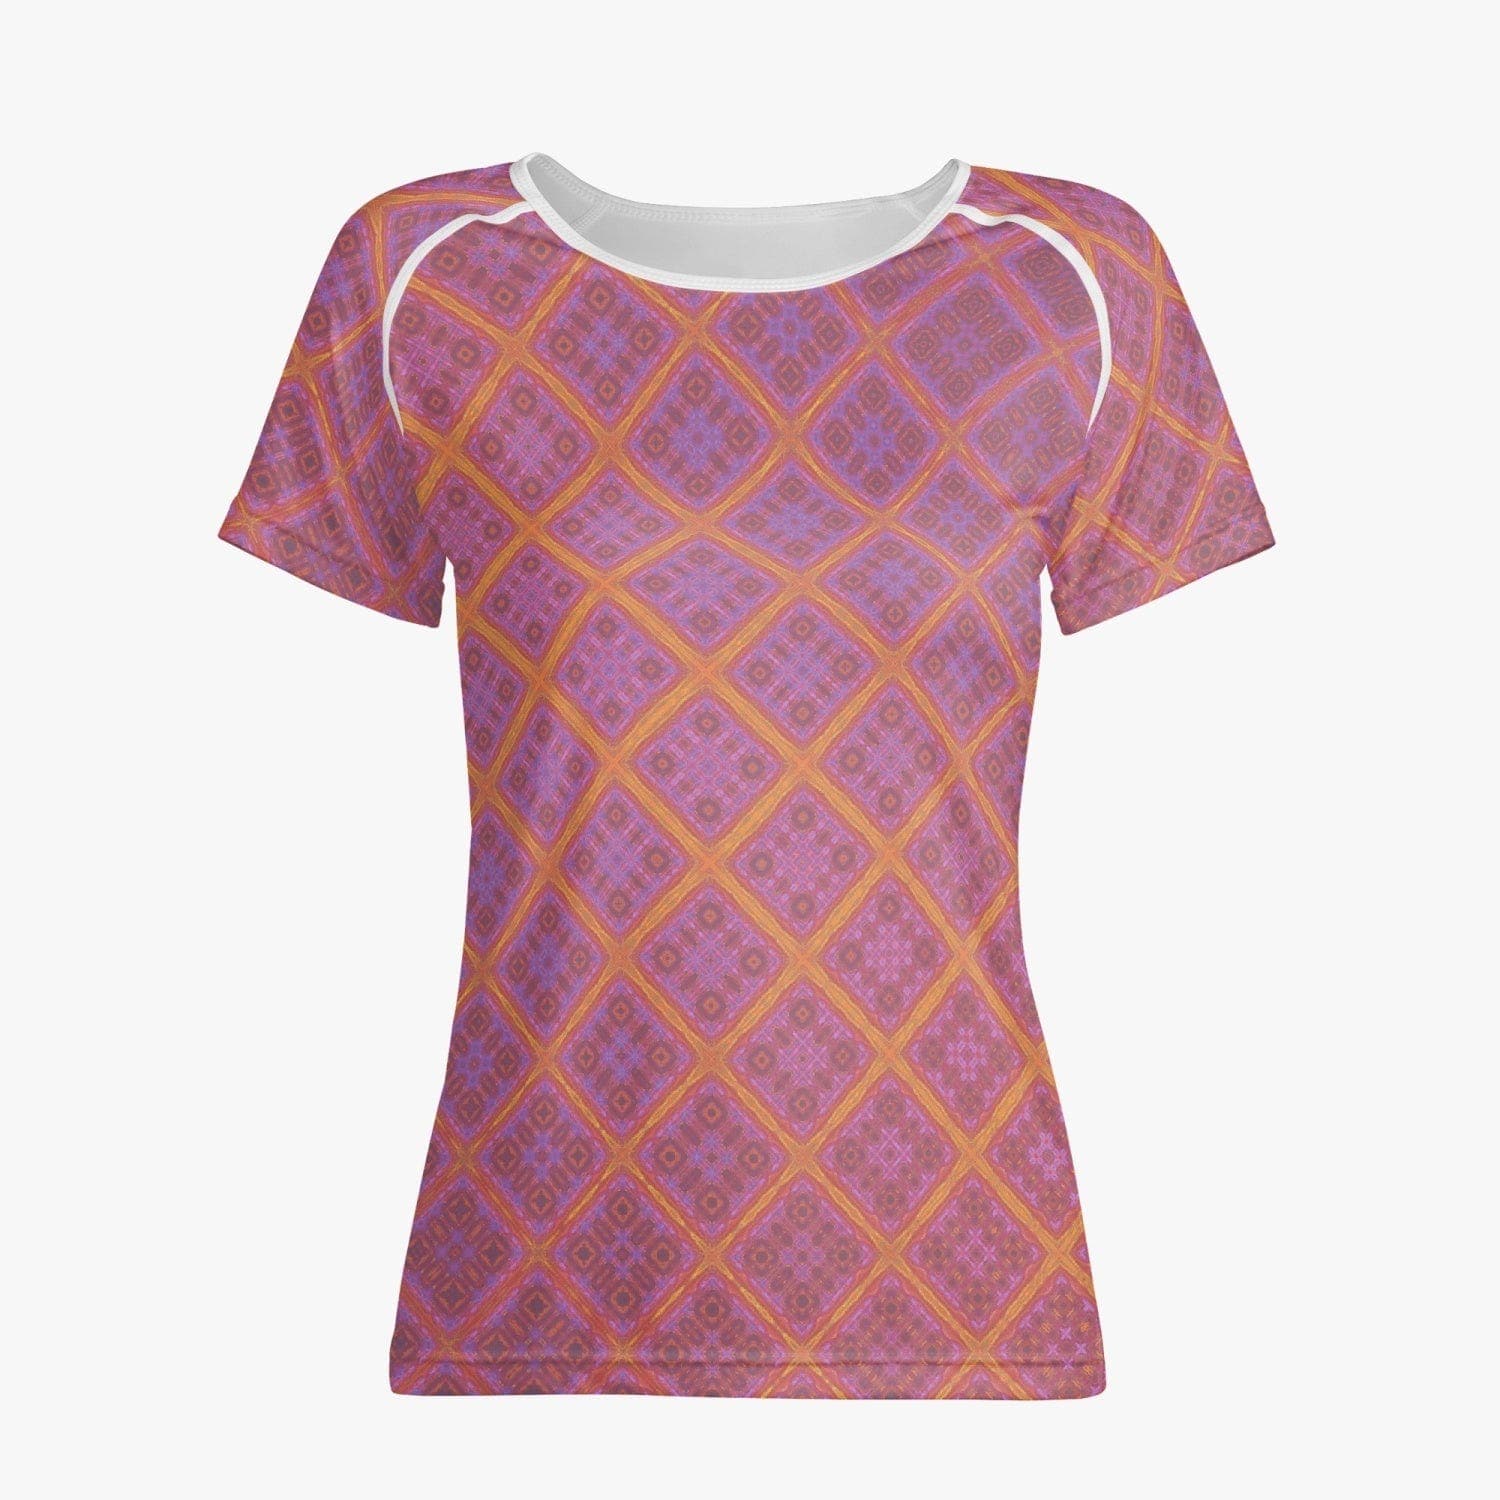 Winter morningsun. Handmade quick dry Sports/Yoga T-shirt for women, by Sensus Studio Design